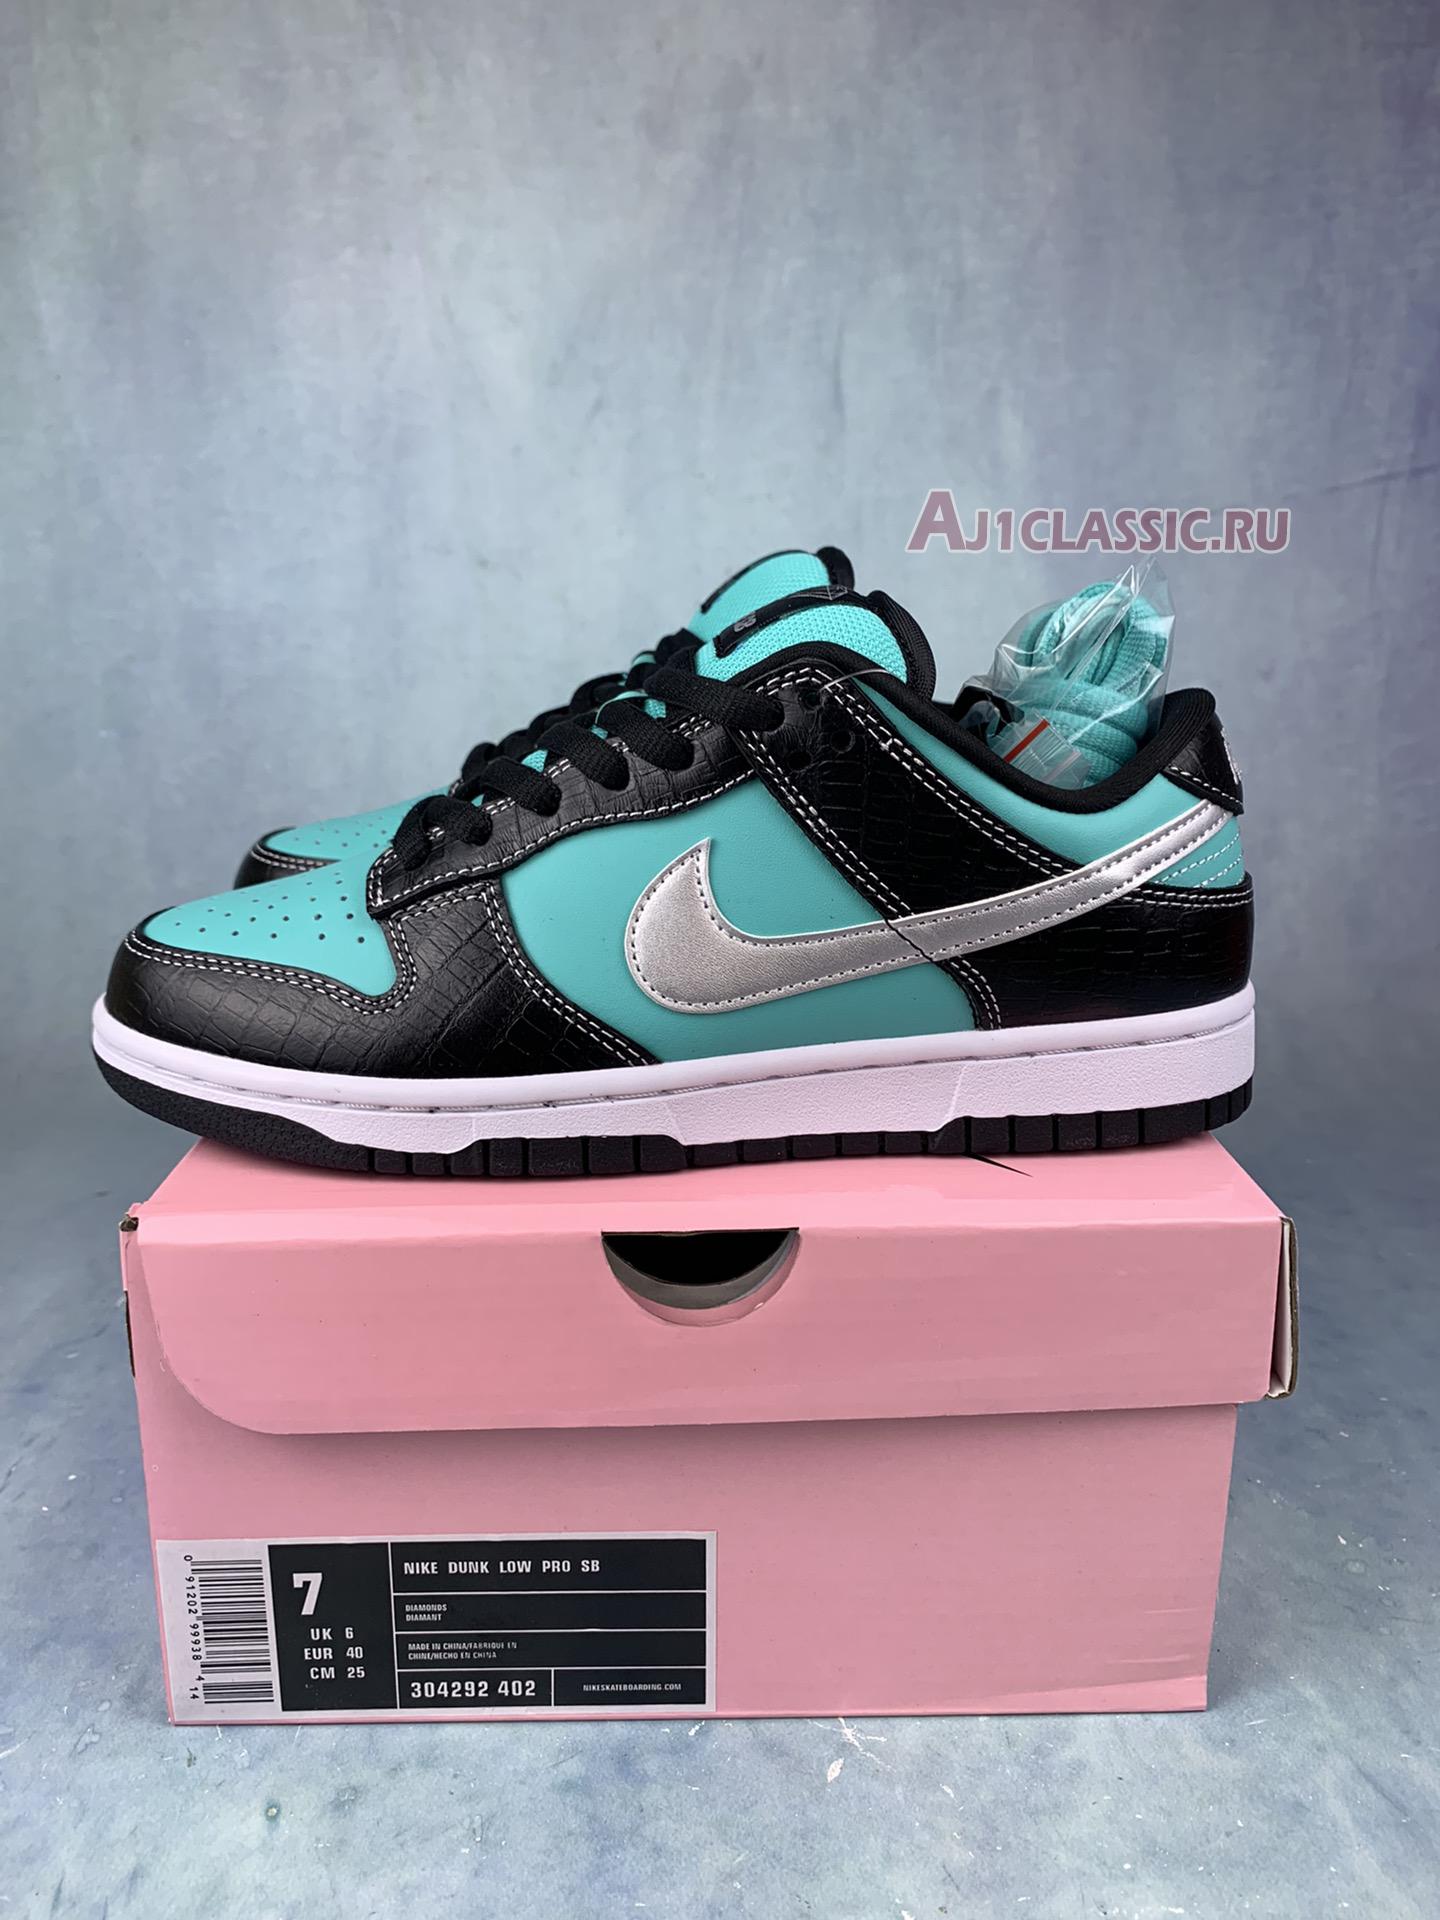 Diamond Supply Co. x Nike Dunk Low Pro SB Tiffany 304292-402-2 Aqua/Chrome Sneakers